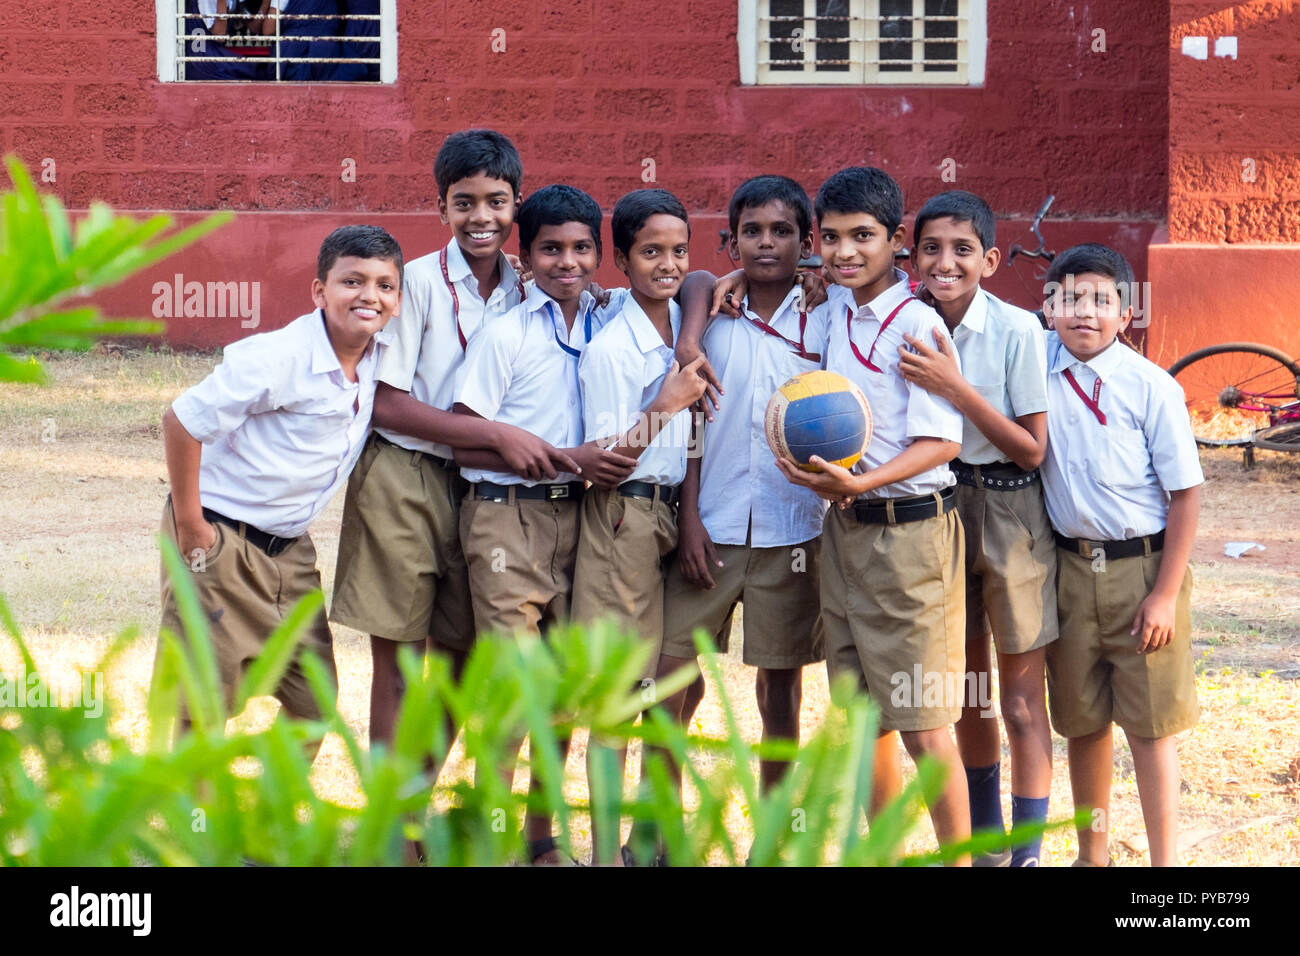 Group of Indian school boys in school uniform Stock Photo